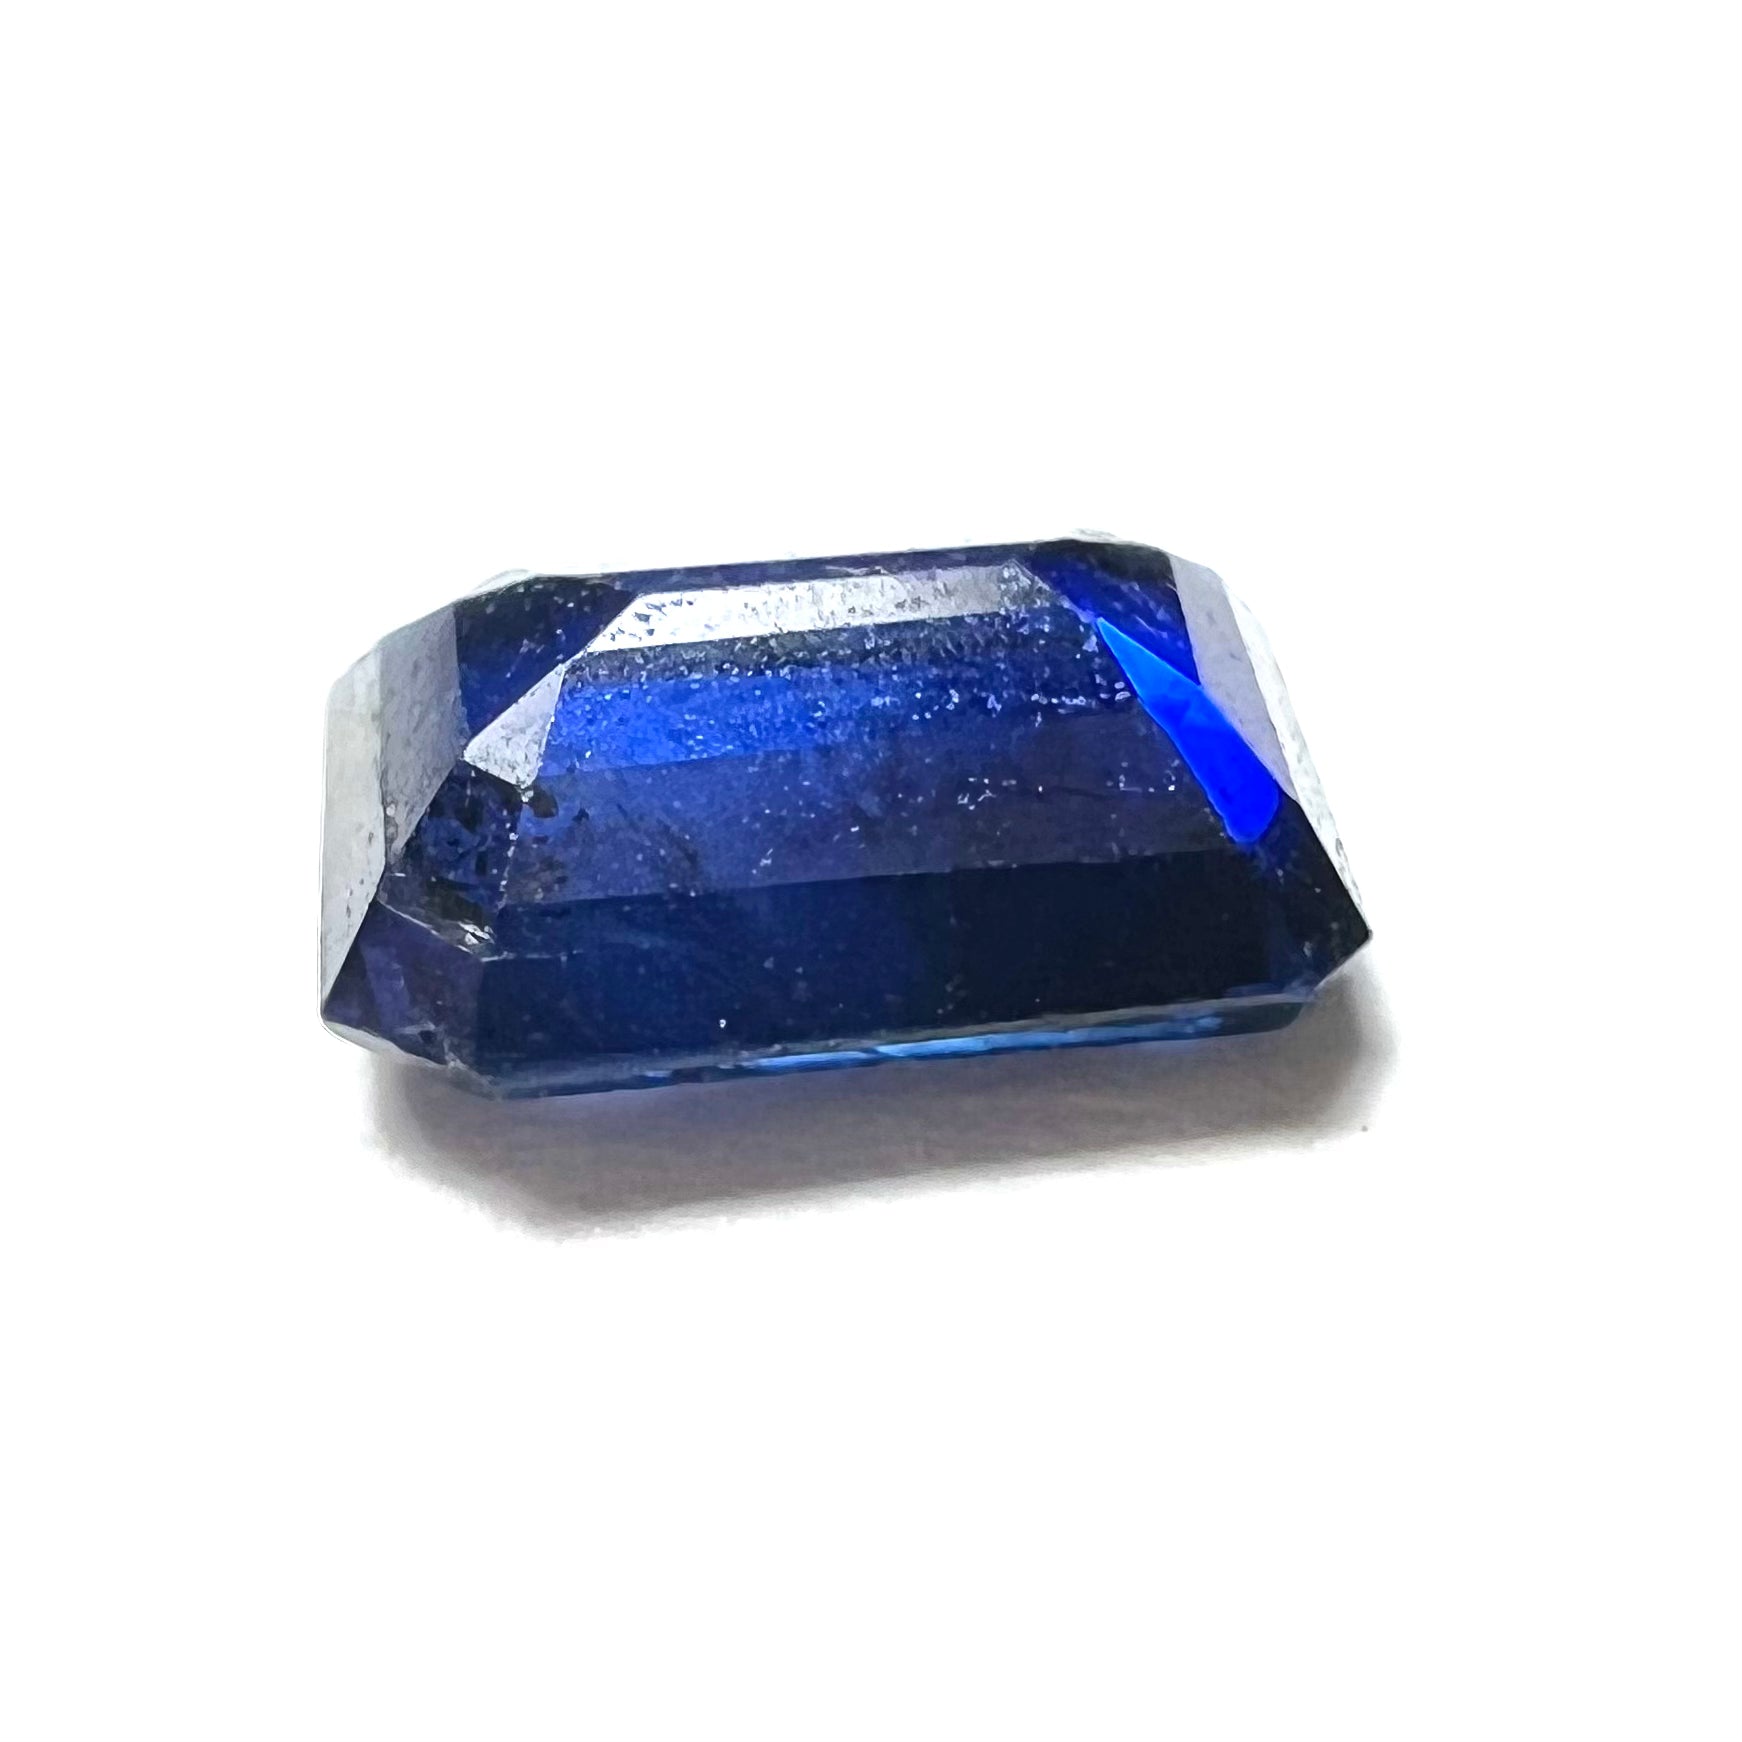 .44CT Loose Blue Emerald Cut Sapphire 5x3.5x2mm Earth mined Gemstone